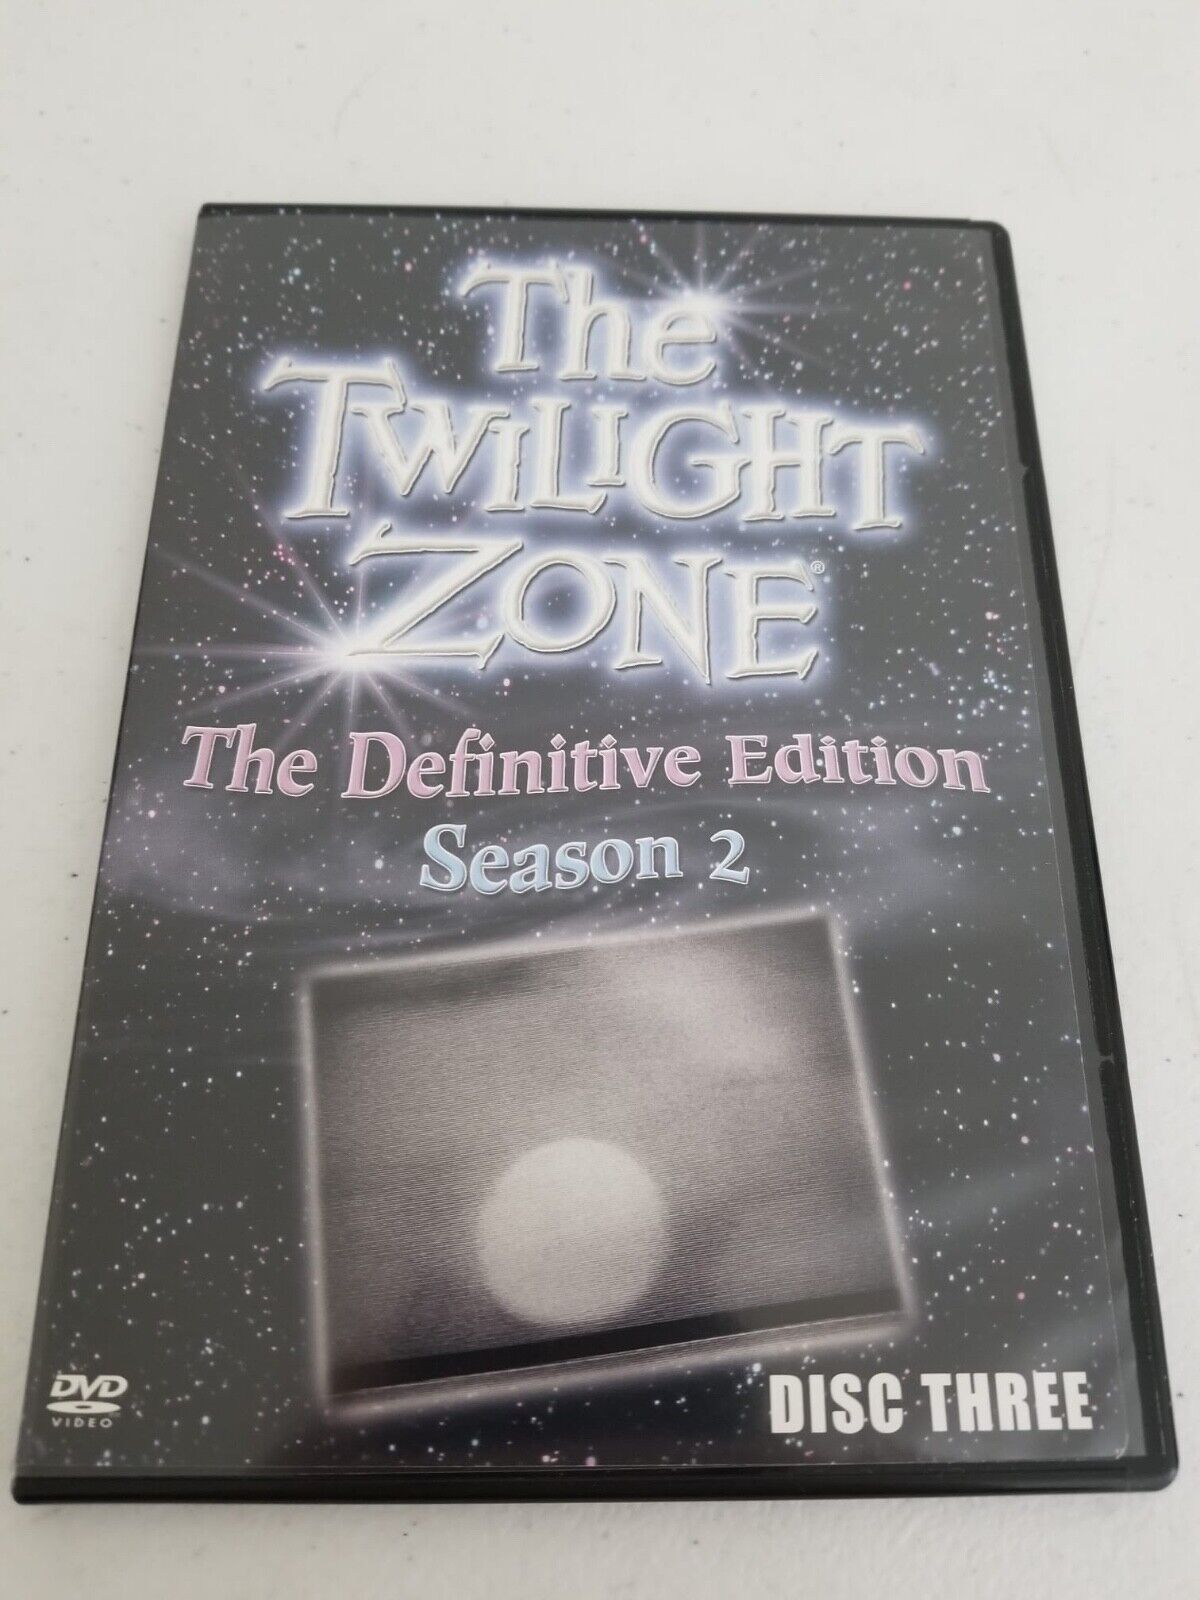 The Twilight Zone Definitive Edition Complete Season 2 Box Set - 5 DVD Collection - TreasuTiques